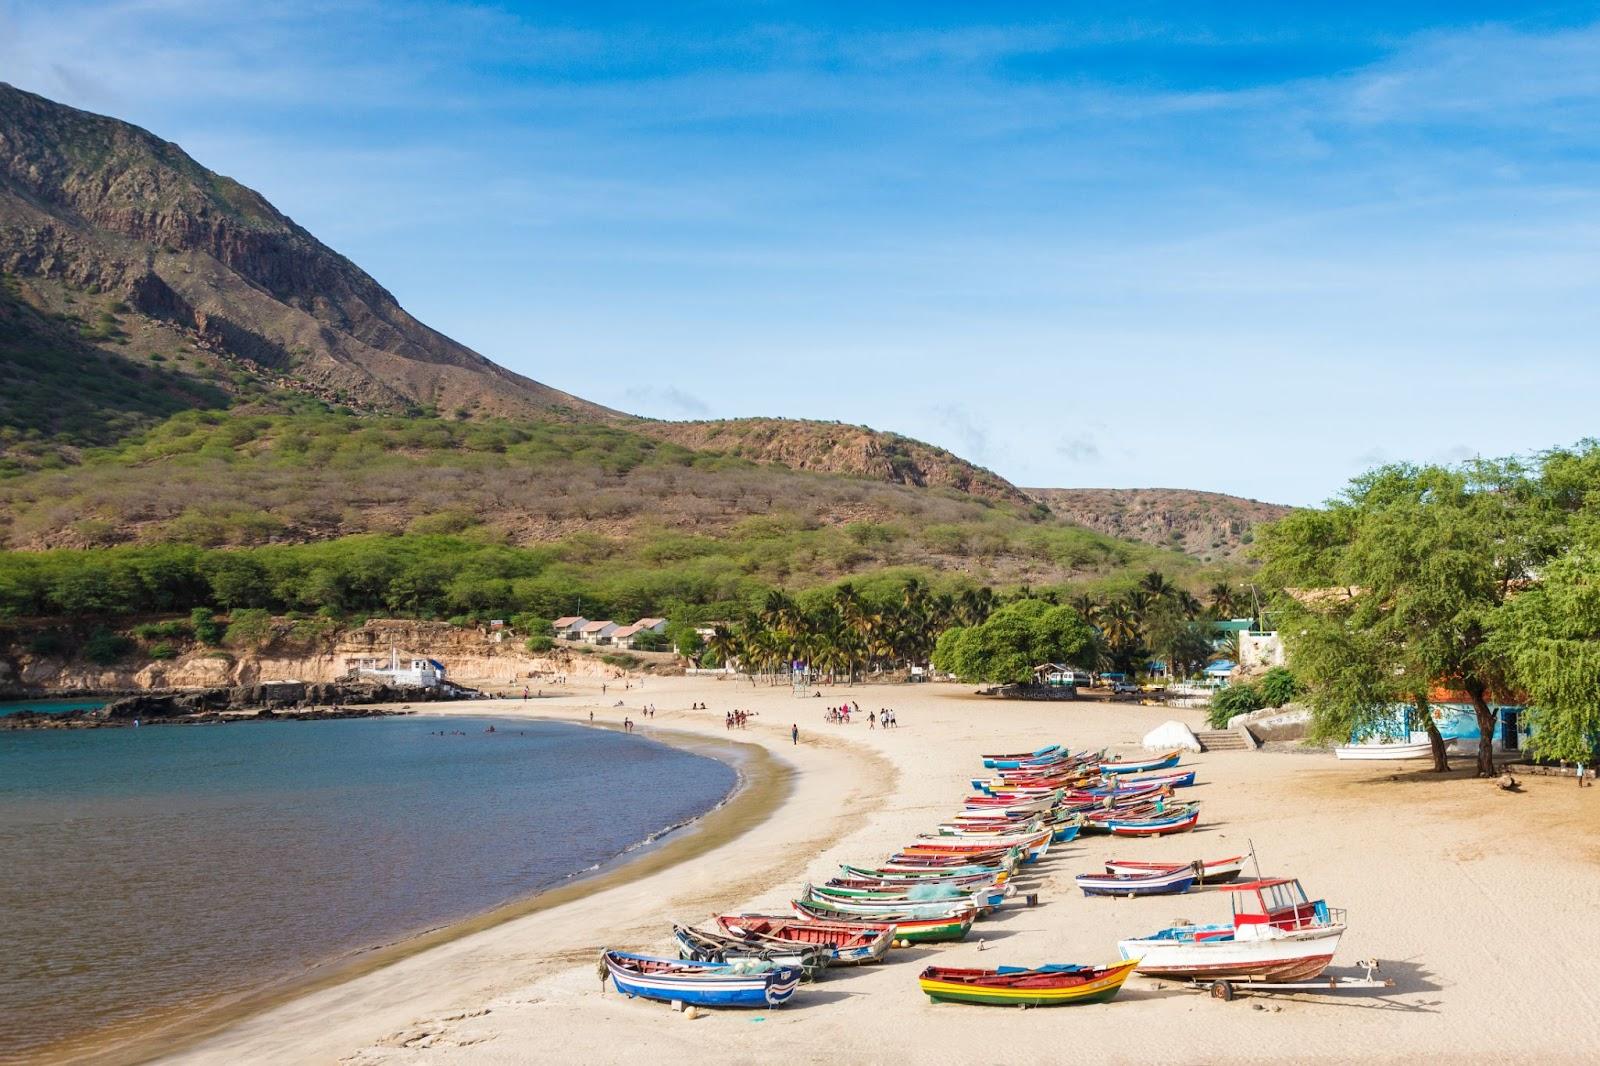 Tarrafal beach in Santiago island in Cape Verde - Cabo Verde